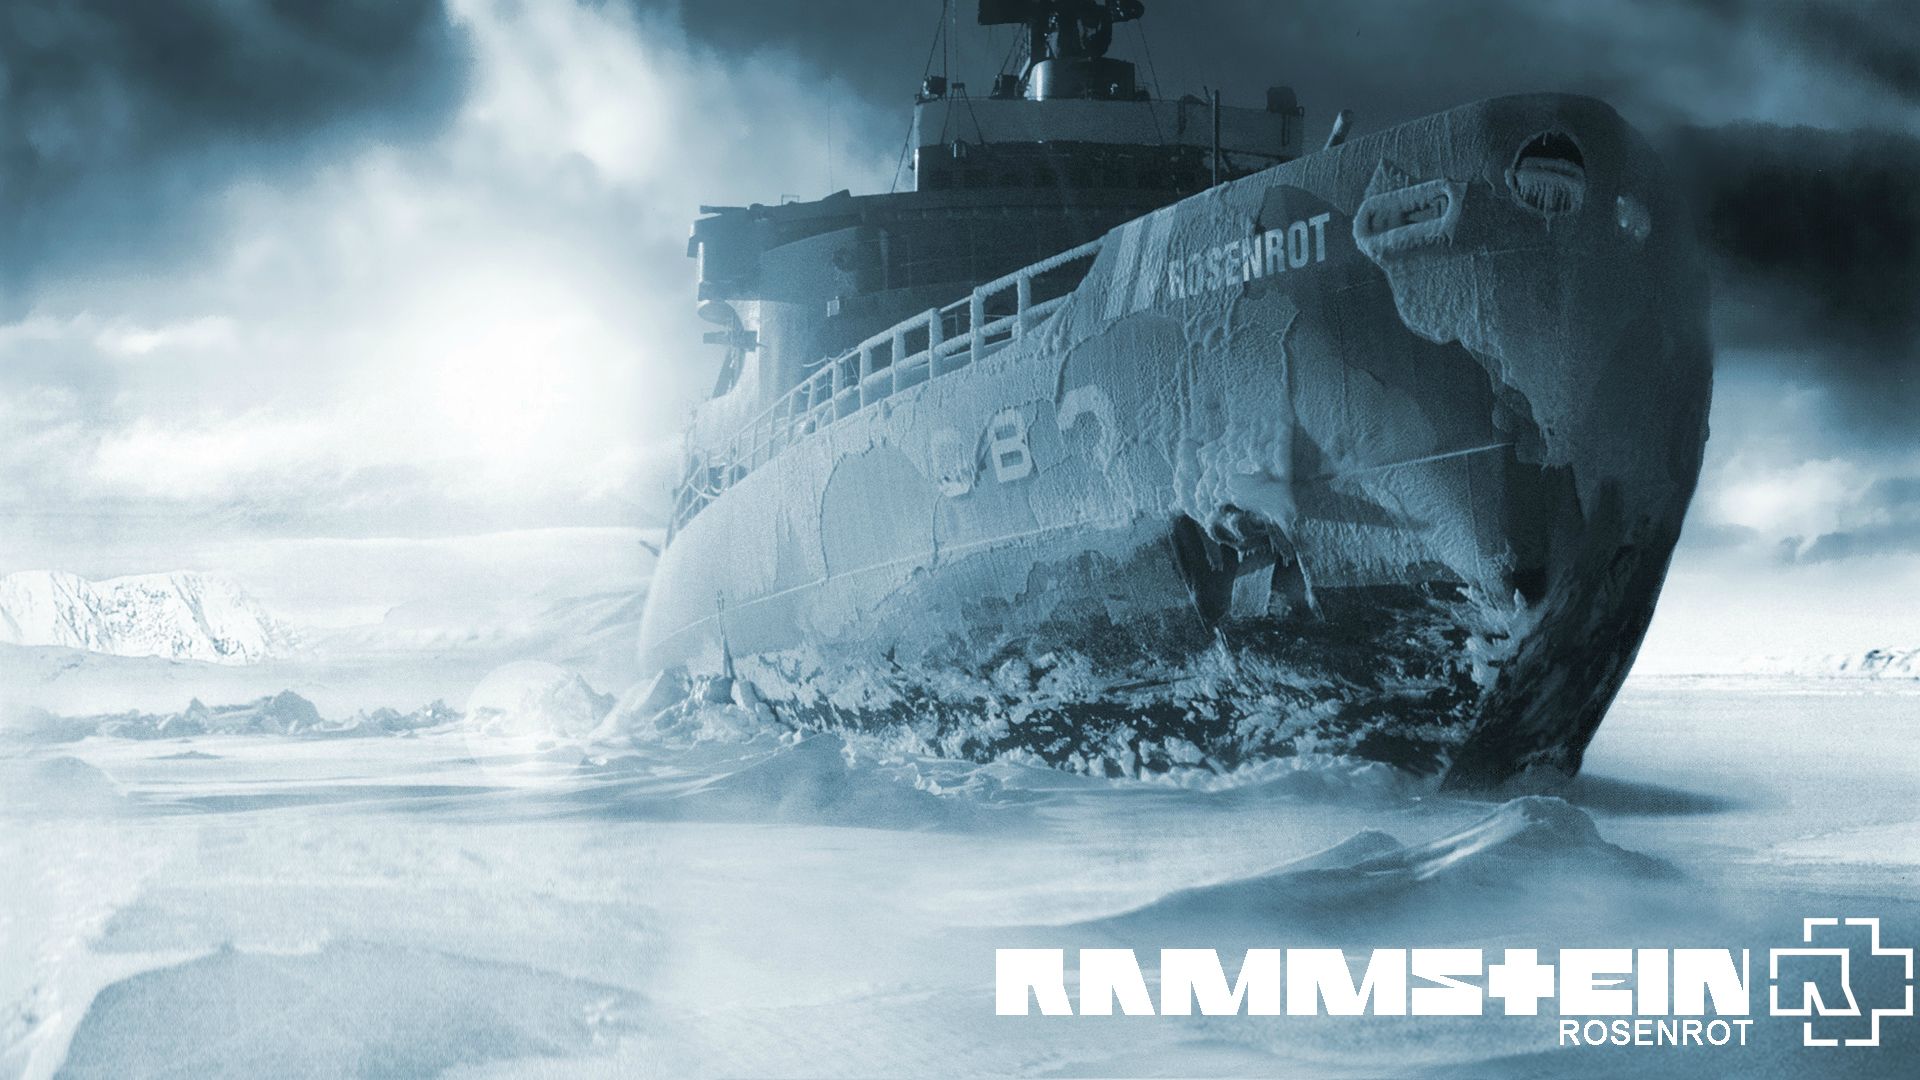 rammstein, germany, music, album, ice, ship, shipwreck 8K